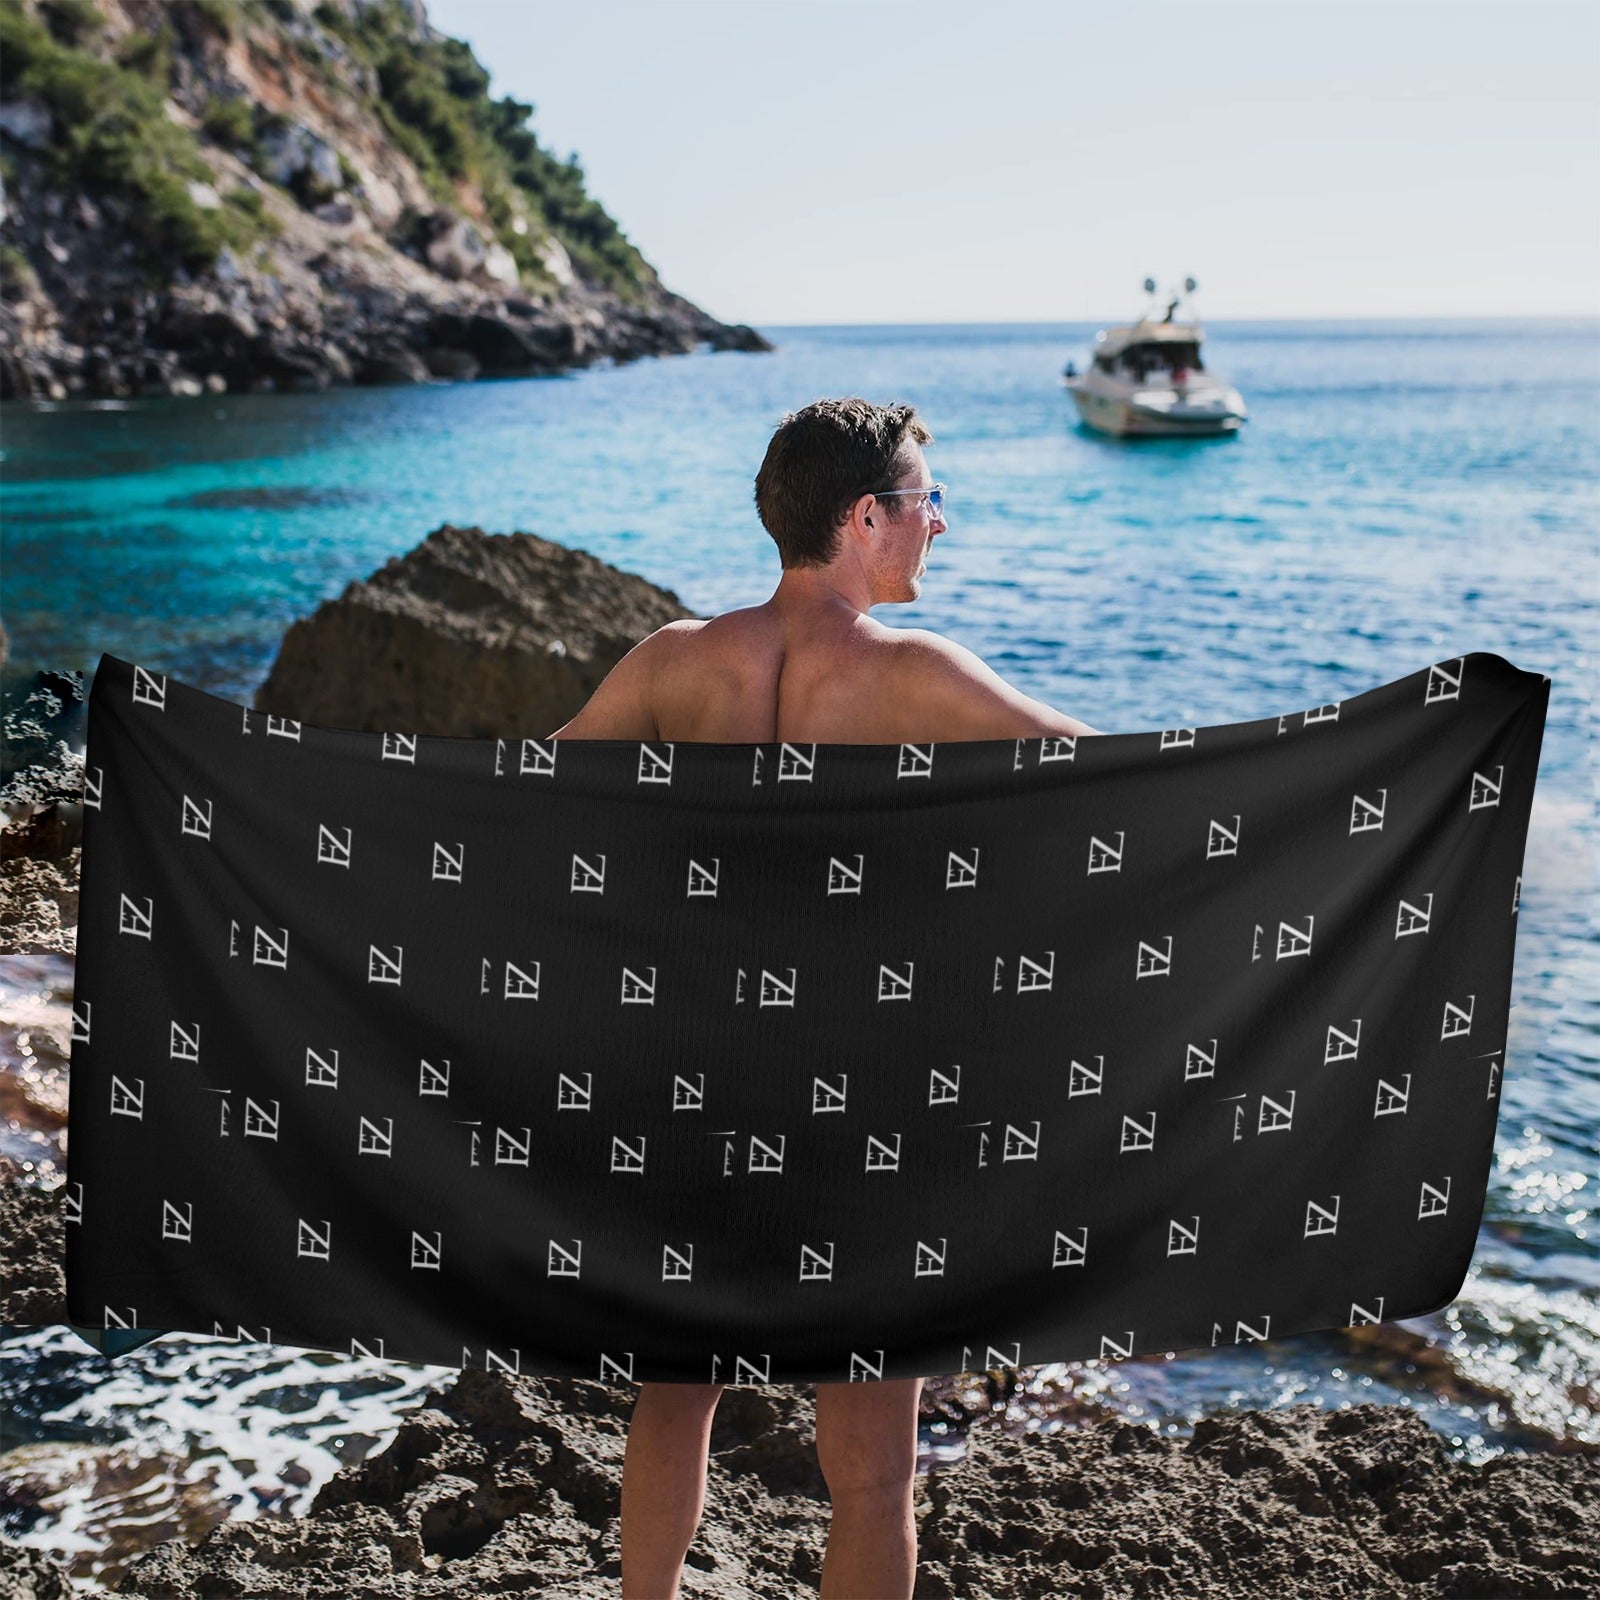 fz towel - black beach towel 31"x71"(new)( made in queen)